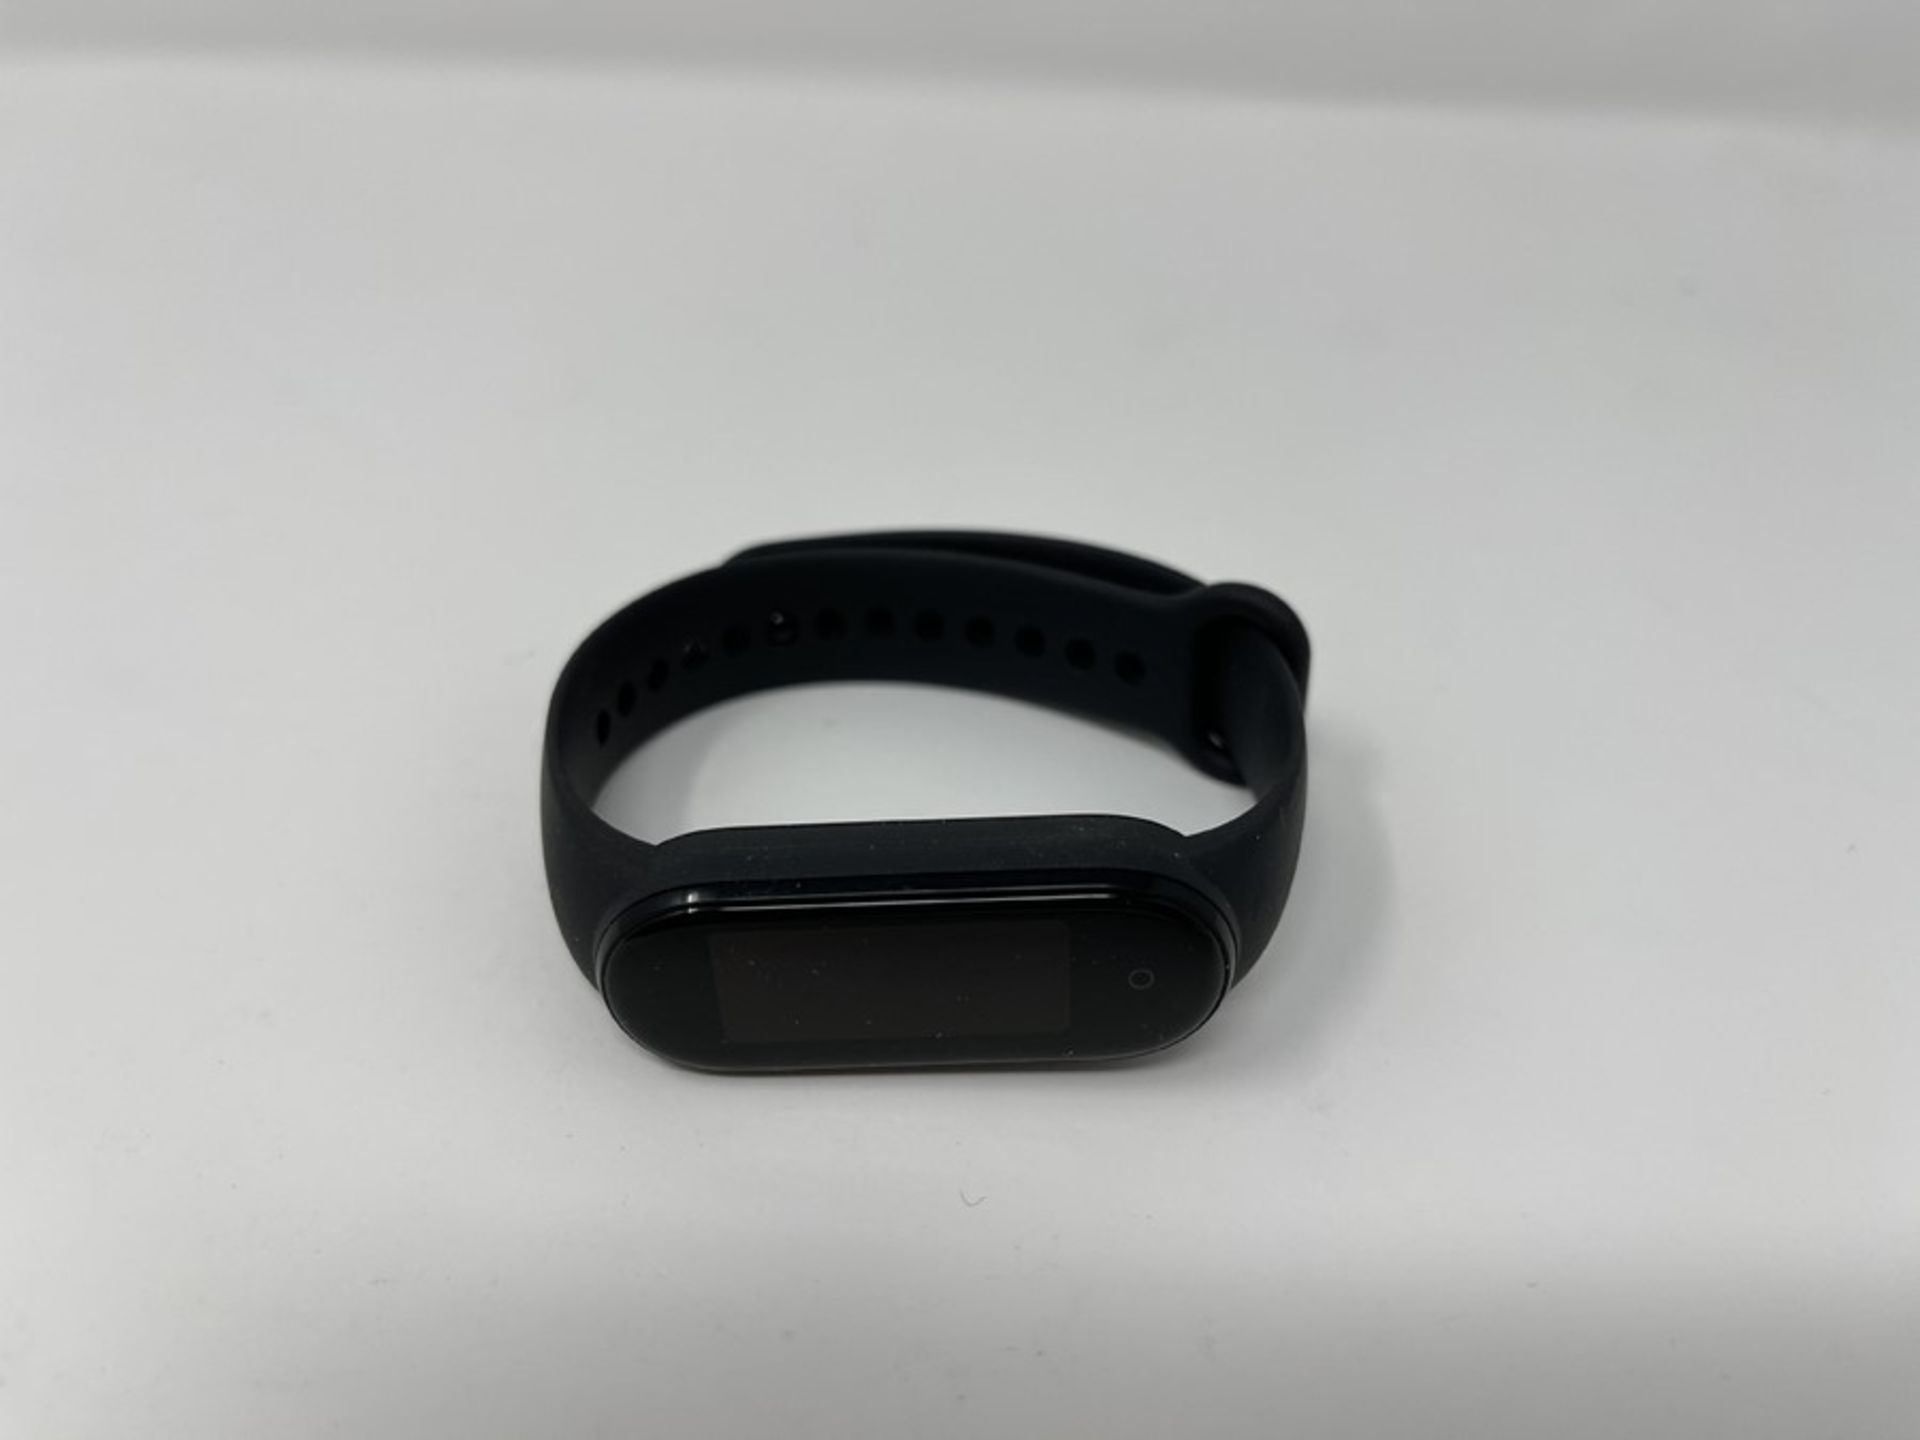 Xiaomi Mi Band 5 Black Health & Fitness Tracker - Image 2 of 2